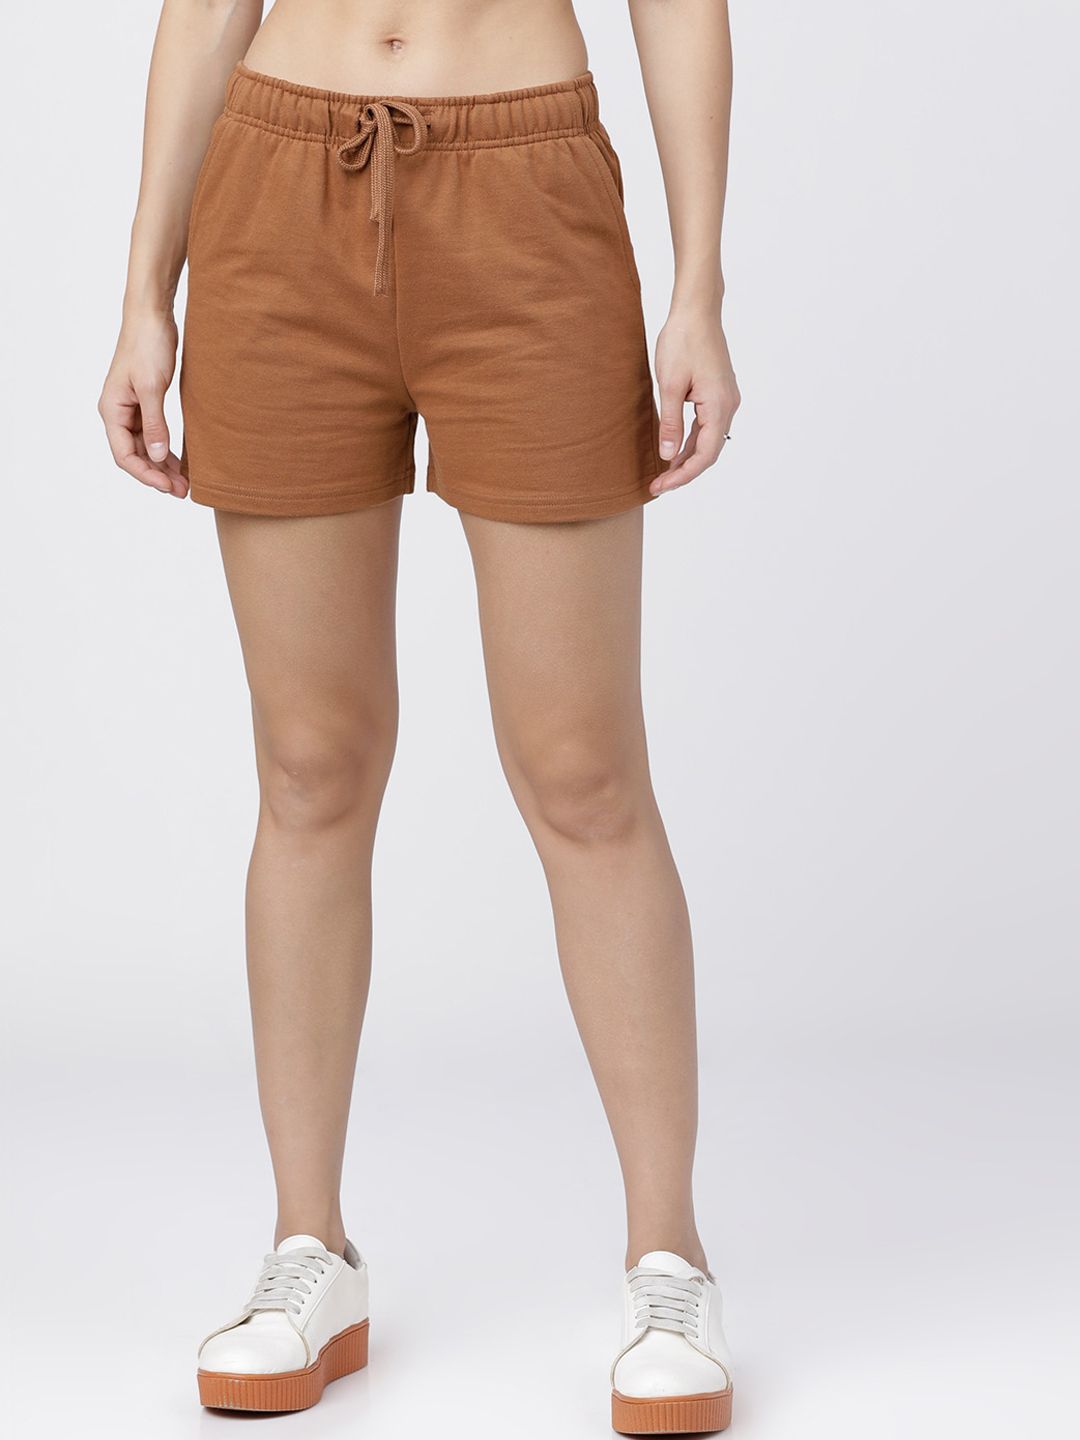 Tokyo Talkies Women Brown Solid Regular Fit Regular Shorts Price in India